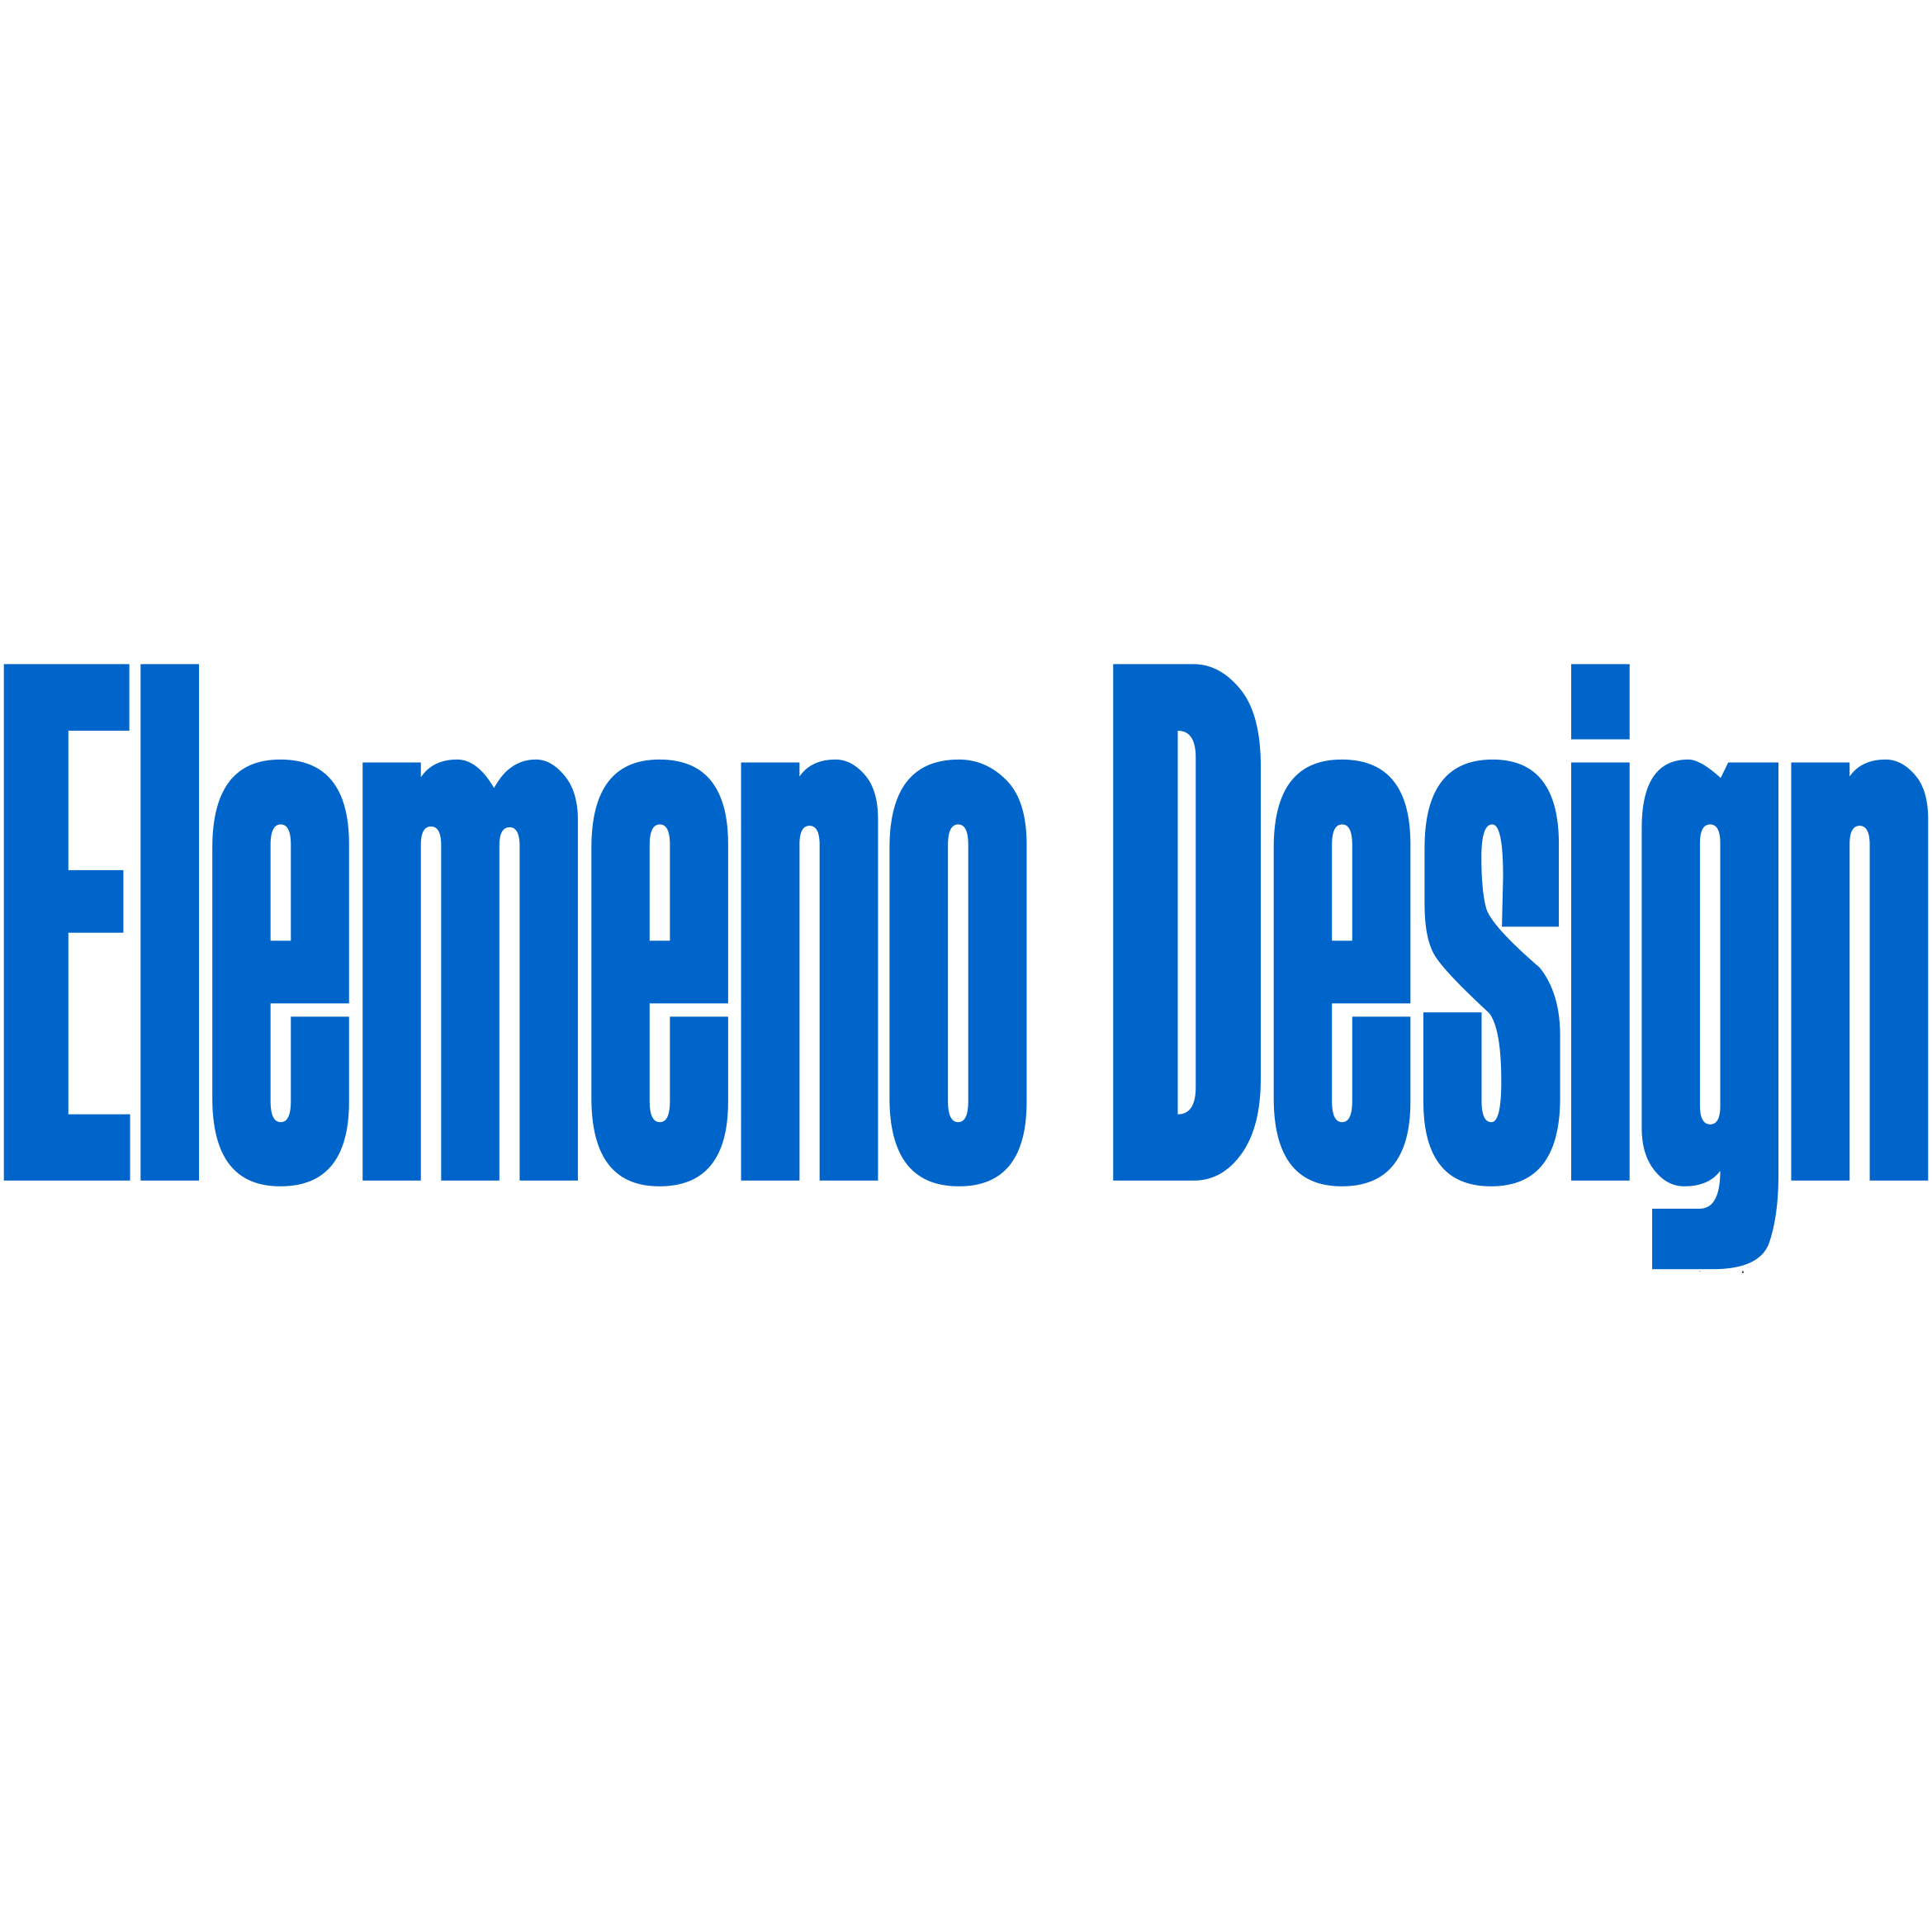 Elemeno Design Logo